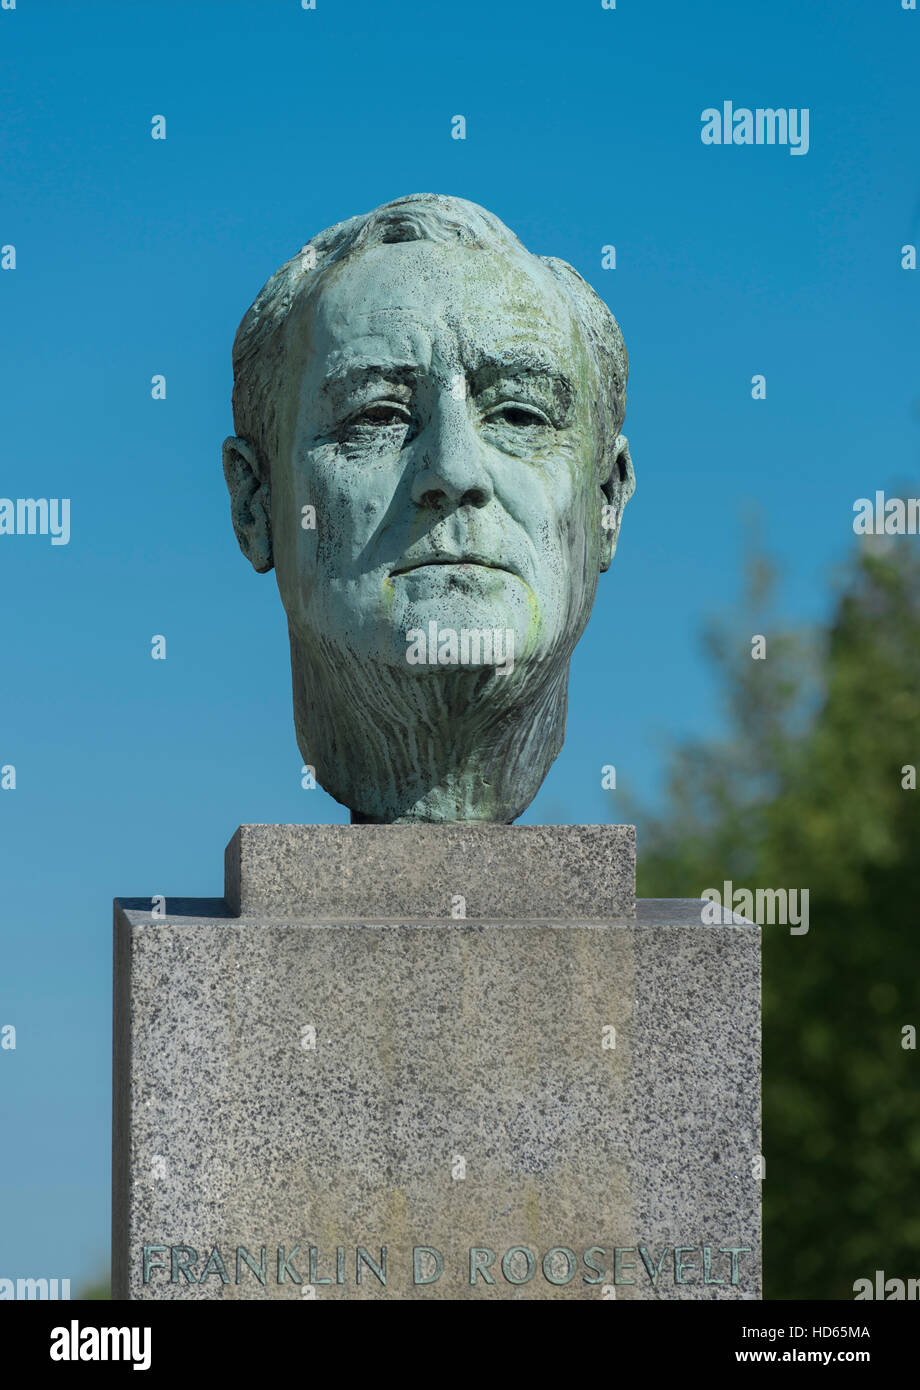 Busto in bronzo di Franklin D. Roosevelt, St. Ann's Square, Copenhagen, Danimarca Foto Stock